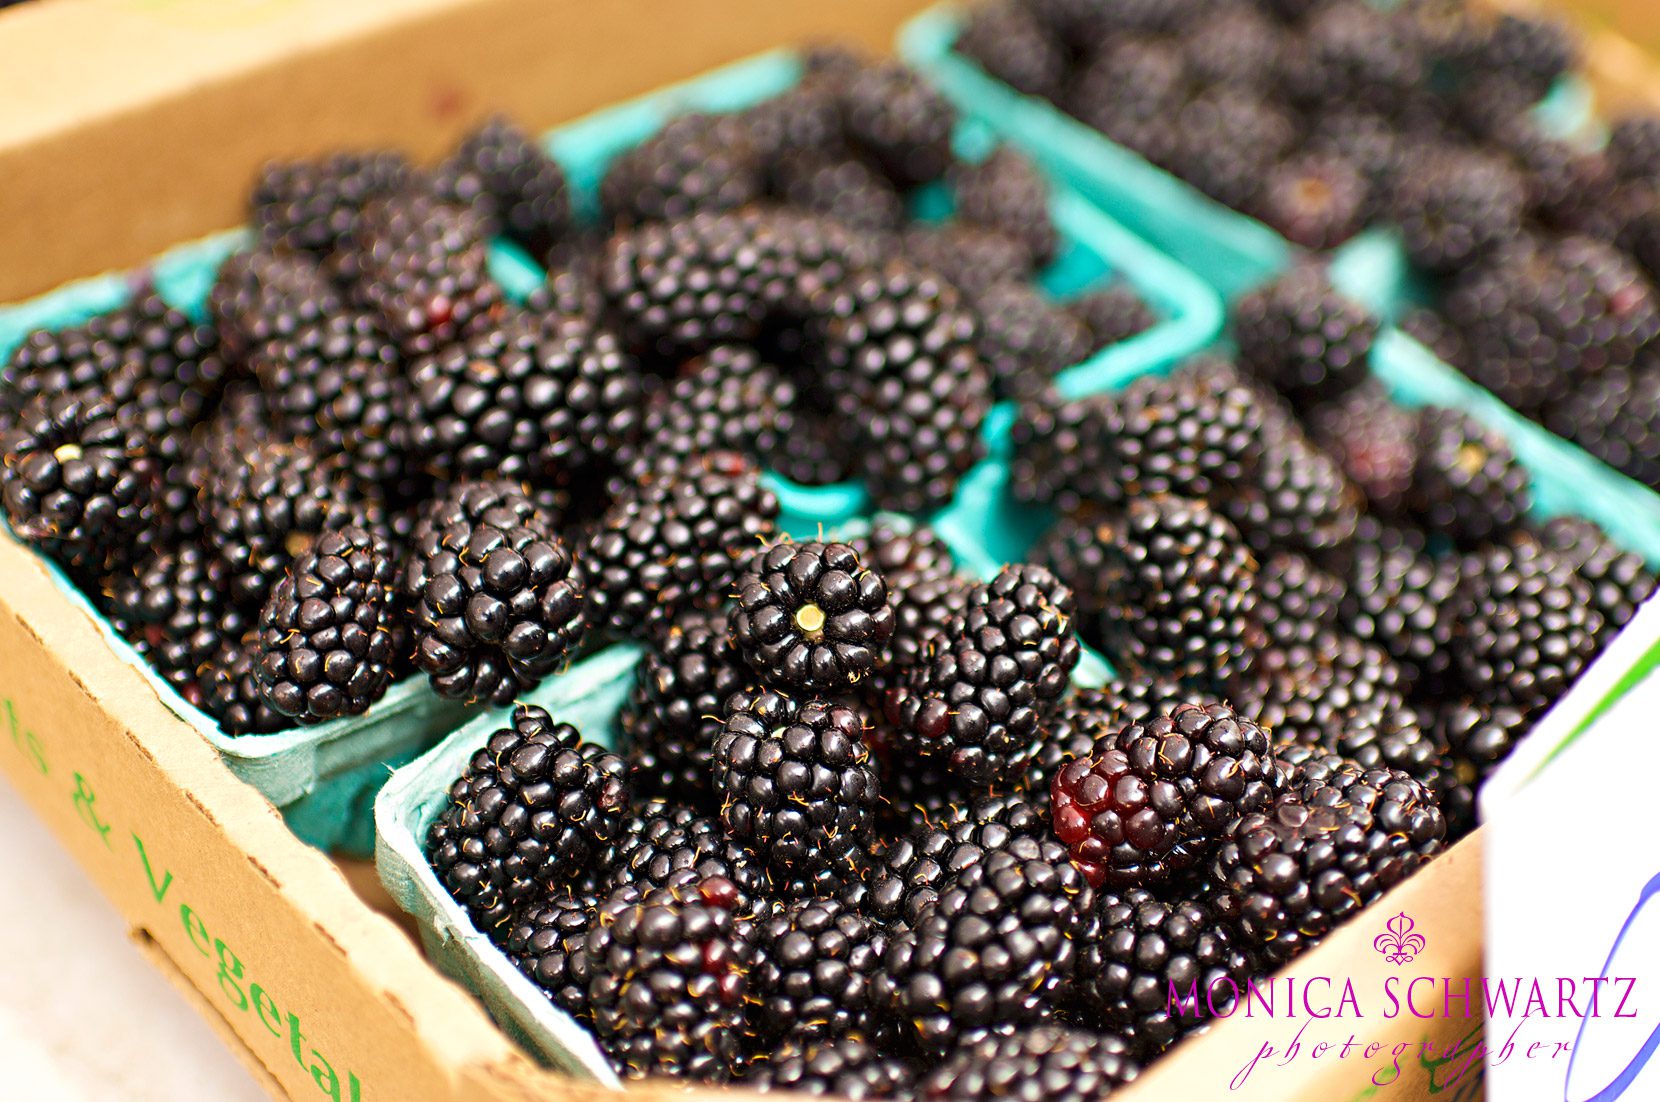 Organic-blackberries-at-the-farmers-market-in-Carmel-by-the-Sea-California